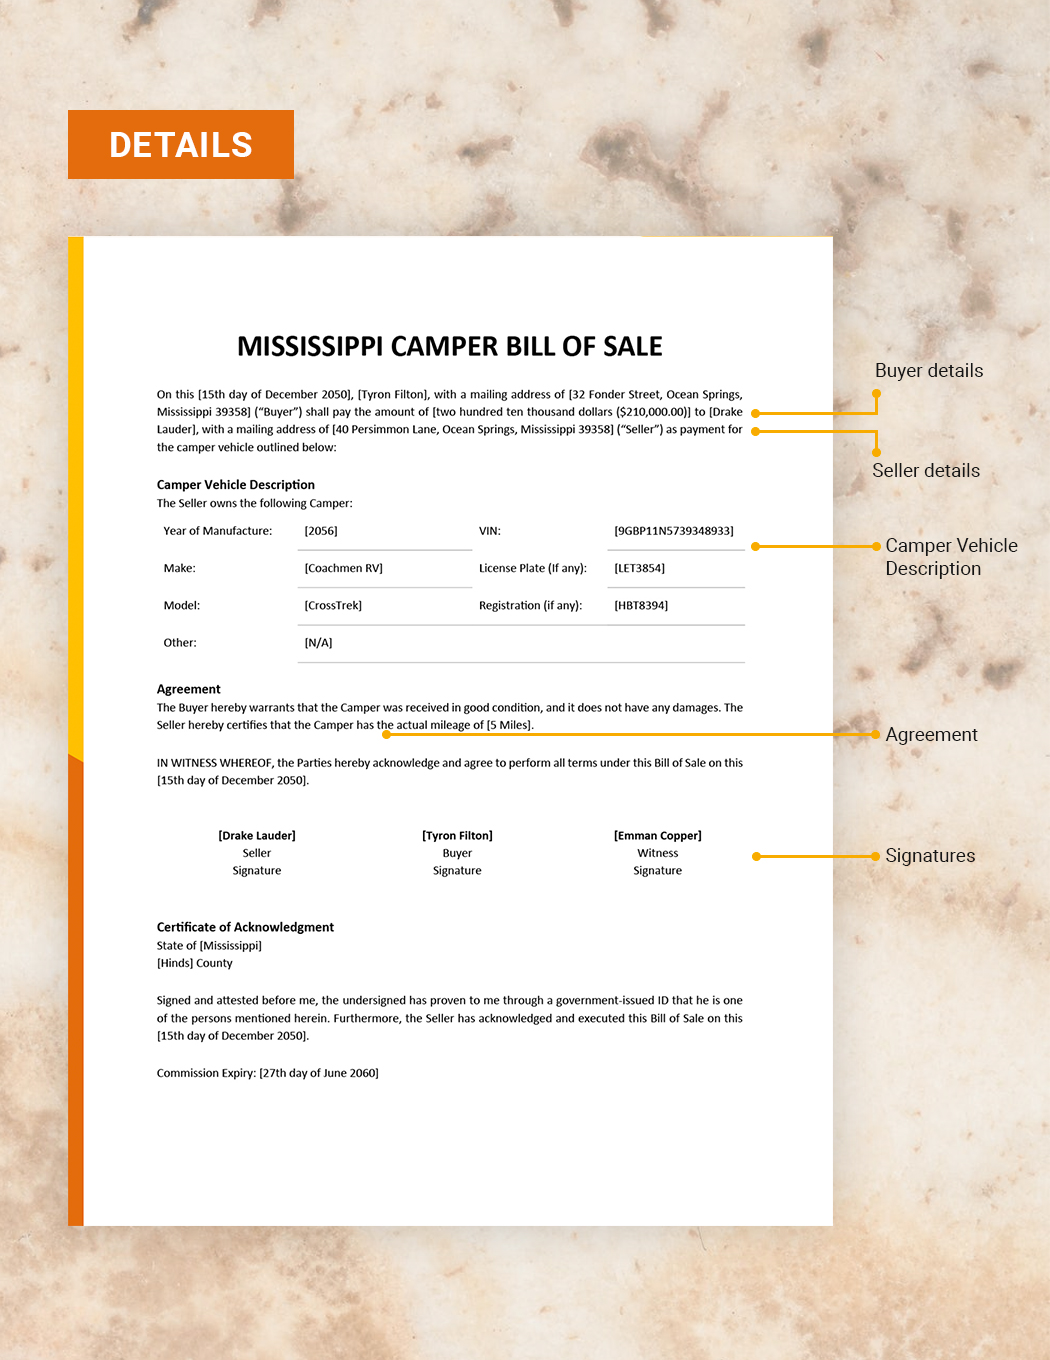 Mississippi Camper Bill of Sale Template